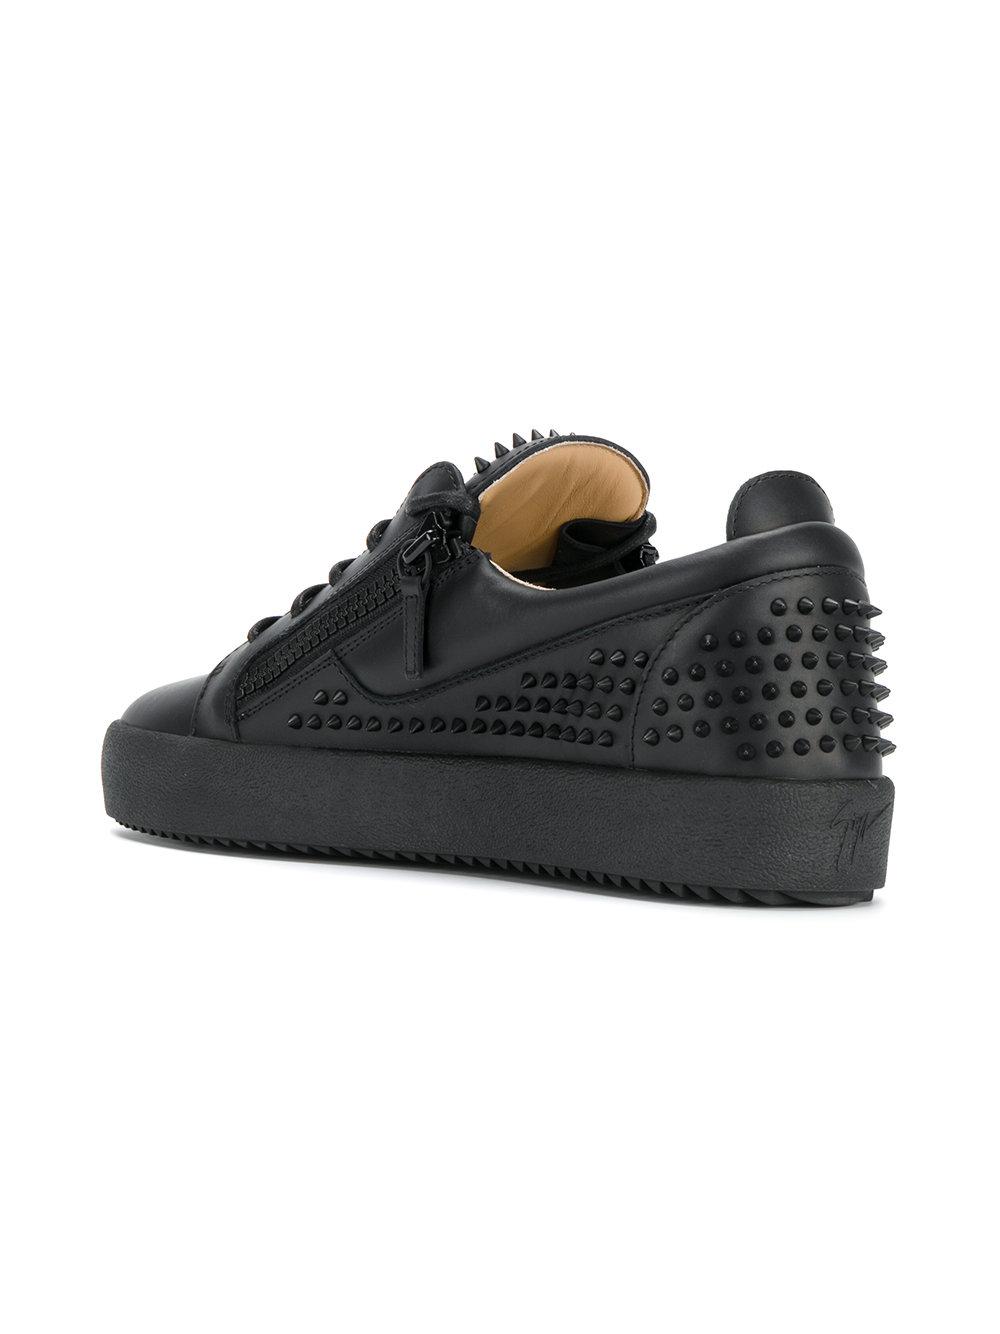 Giuseppe Zanotti Leather Frankie Stud Low-top Sneakers in Black for Men -  Lyst